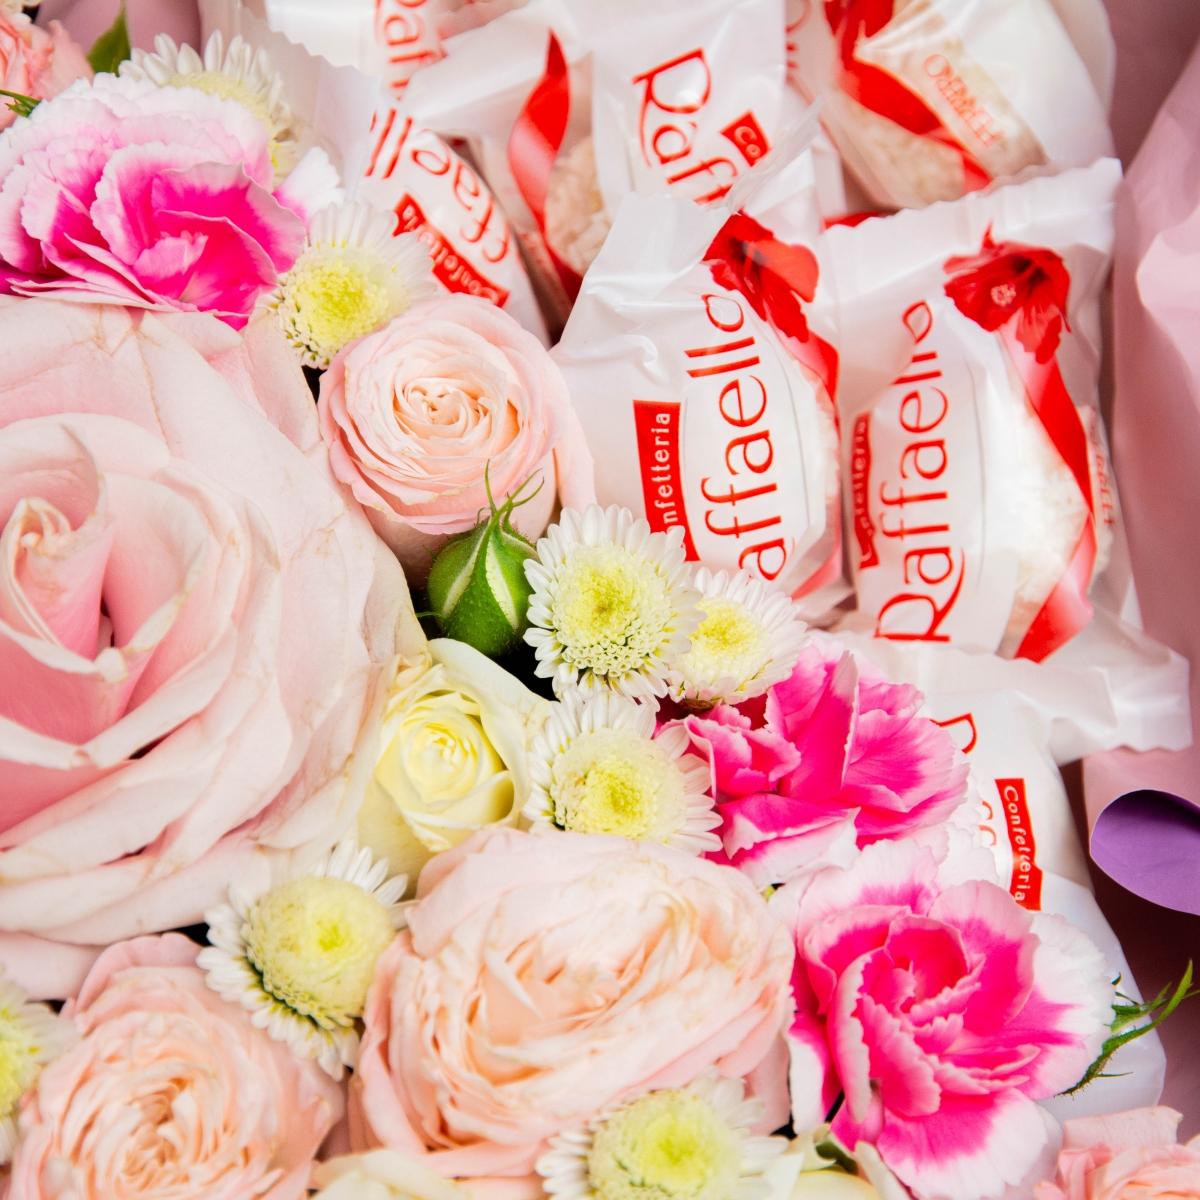 Коробка-сердце с розами и конфетами